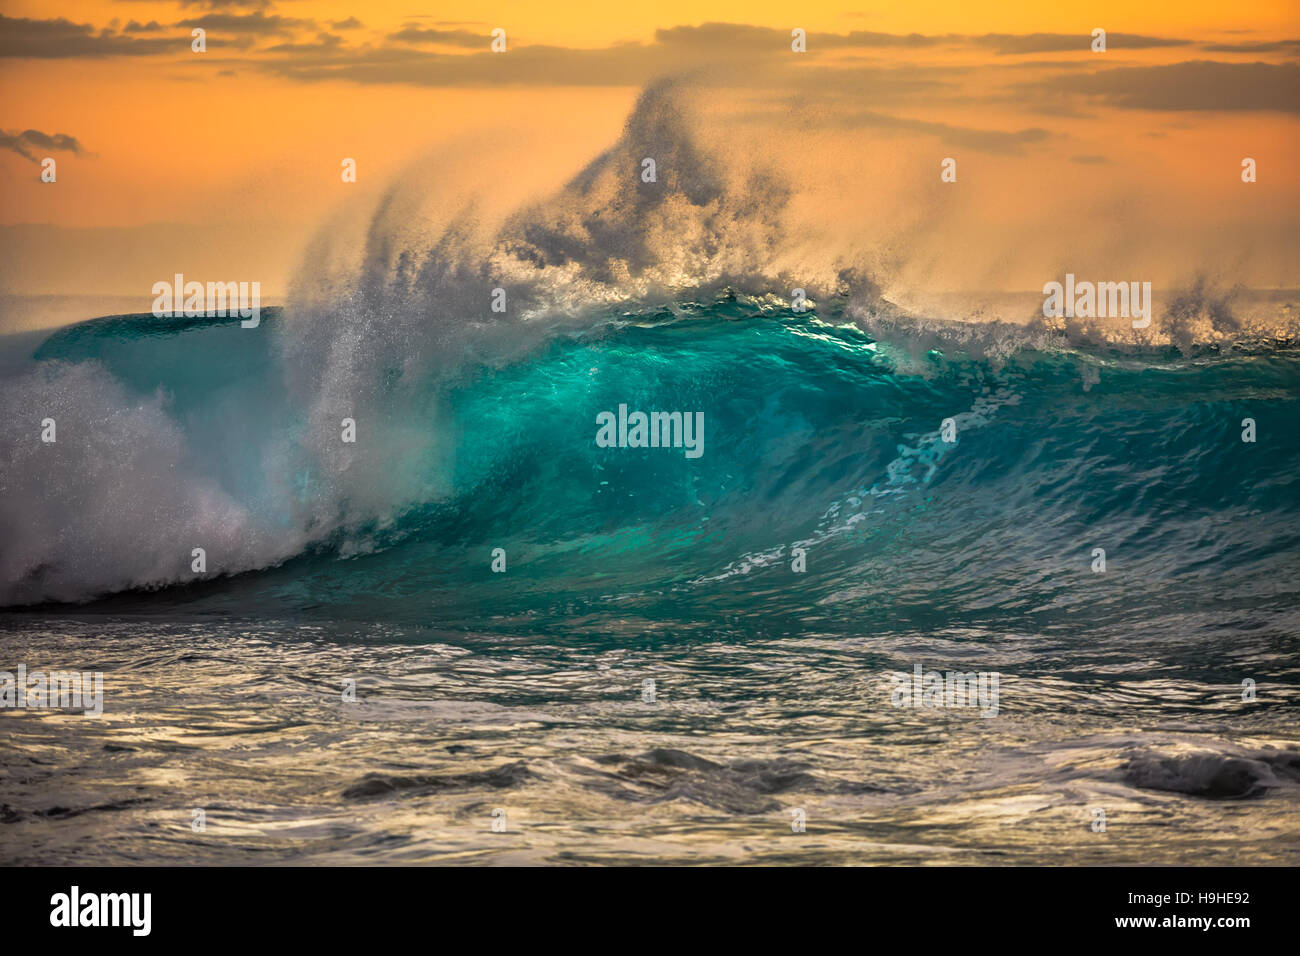 Green blue ocean splashing wave in front of orange sunset sky background Stock Photo